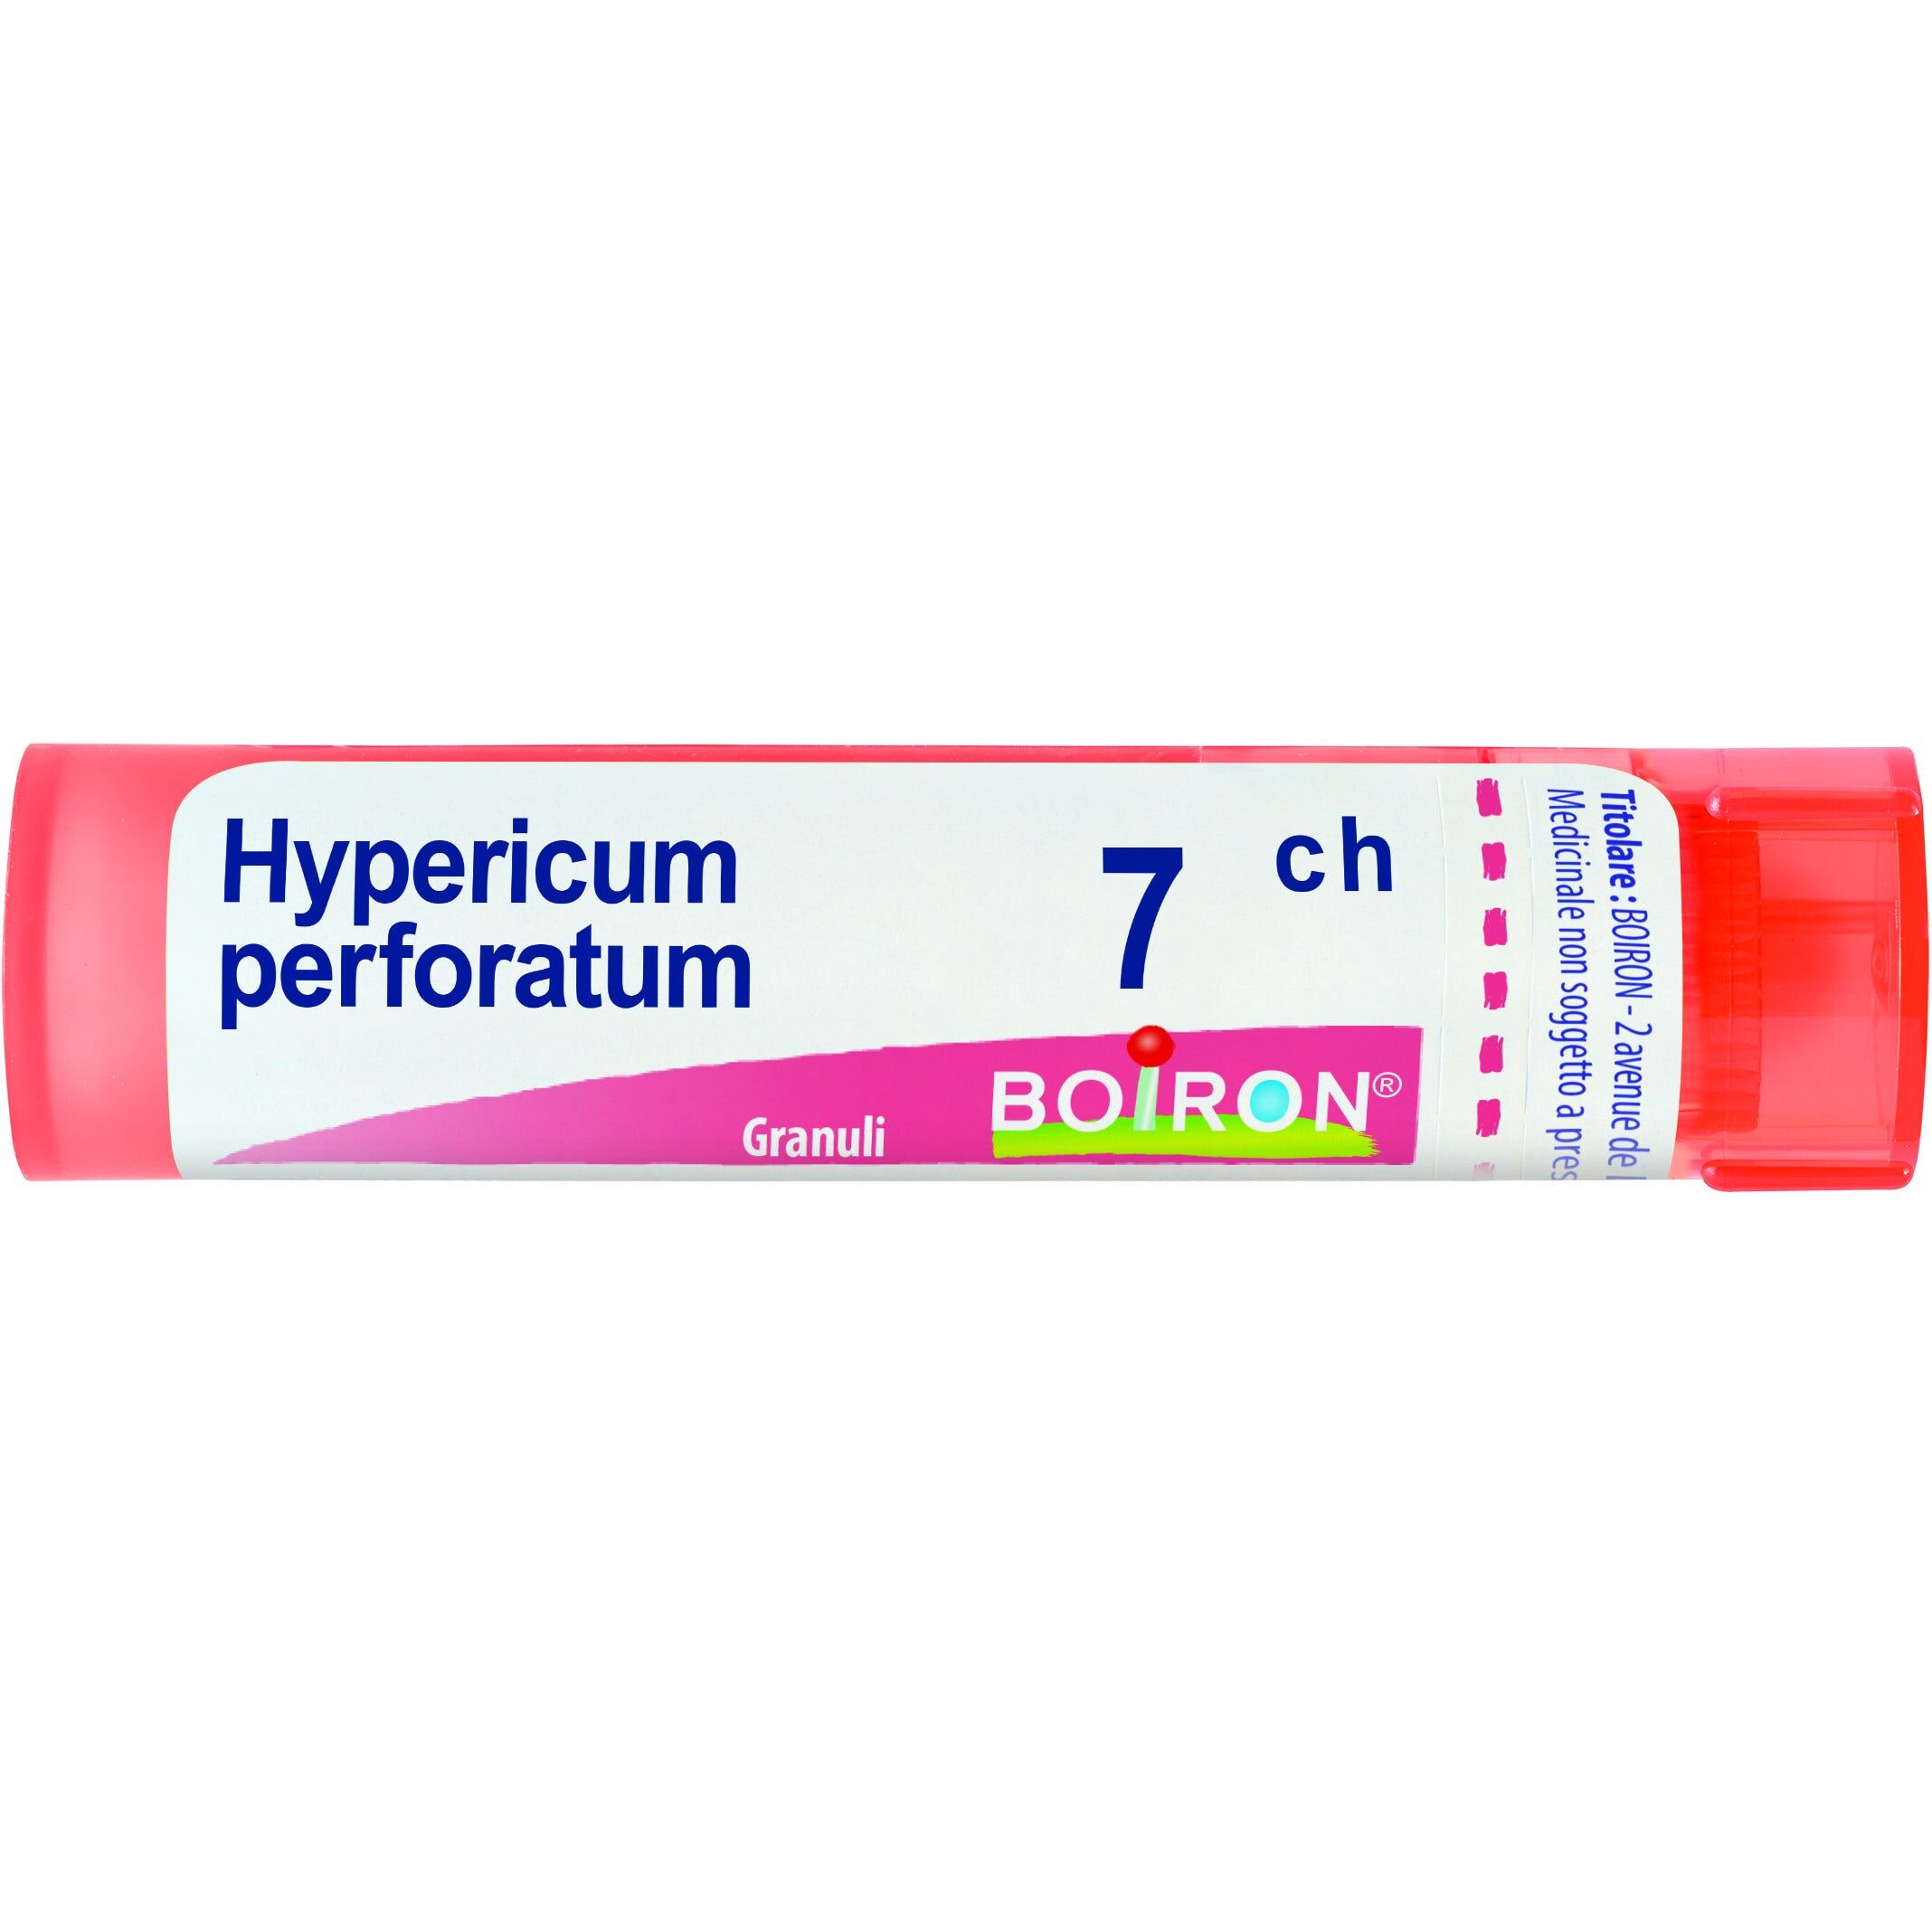 Boiron Hypericum Perforatum 7 Ch Granuli